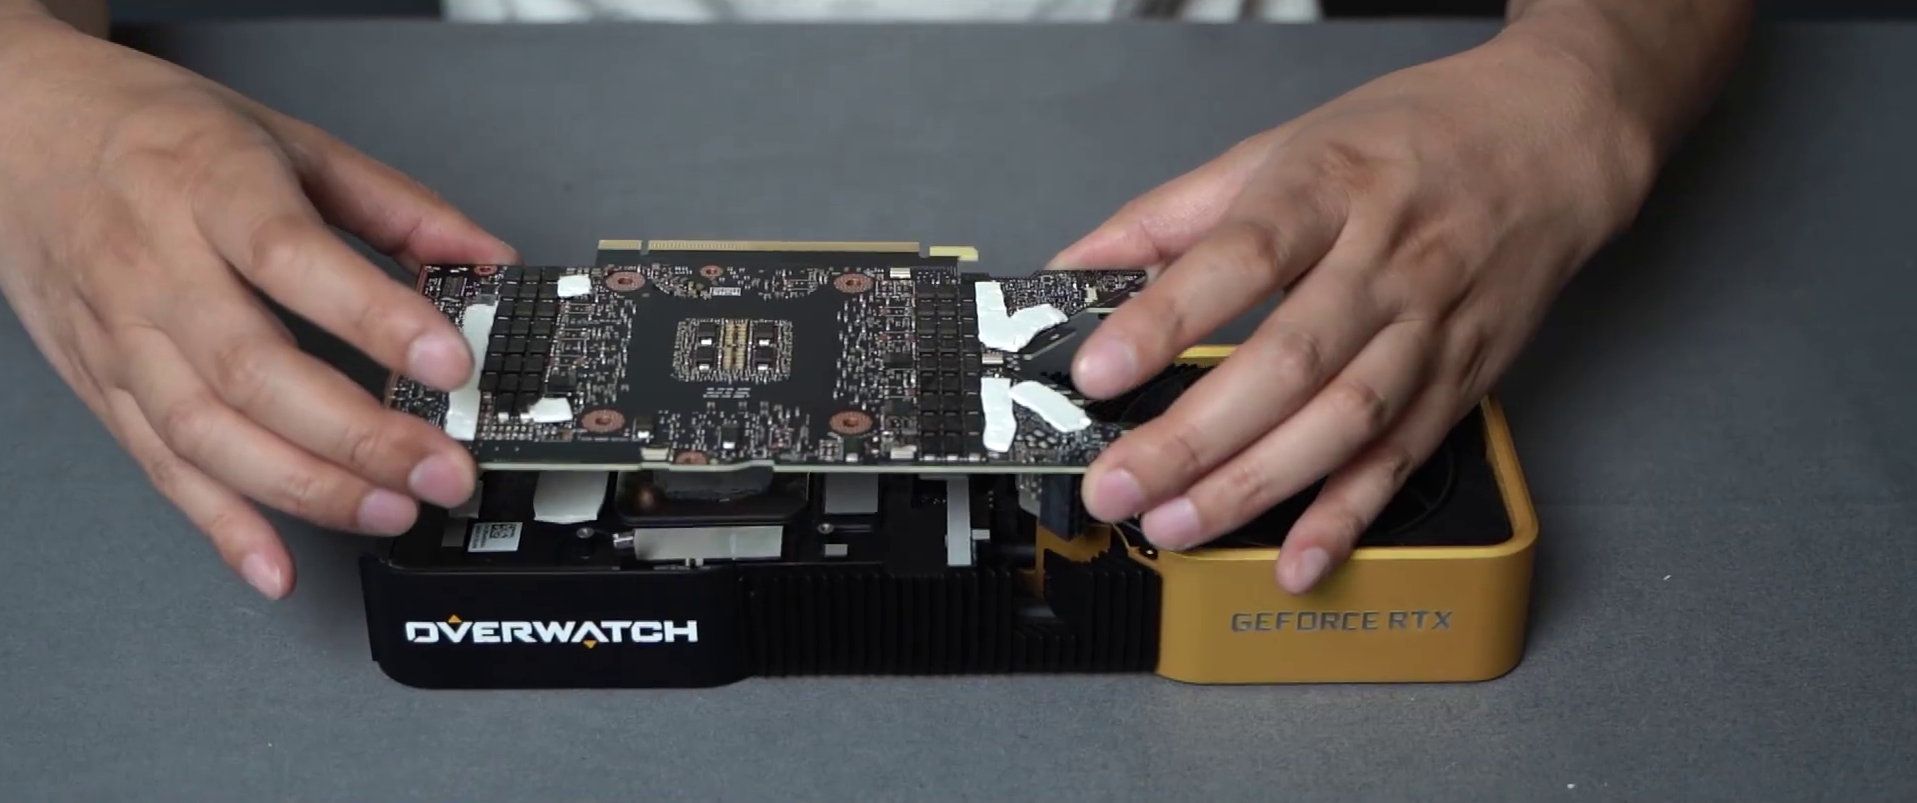 NVIDIA показала кастомную видеокарту GeForce RTX 3080 в стиле игры Overwatch